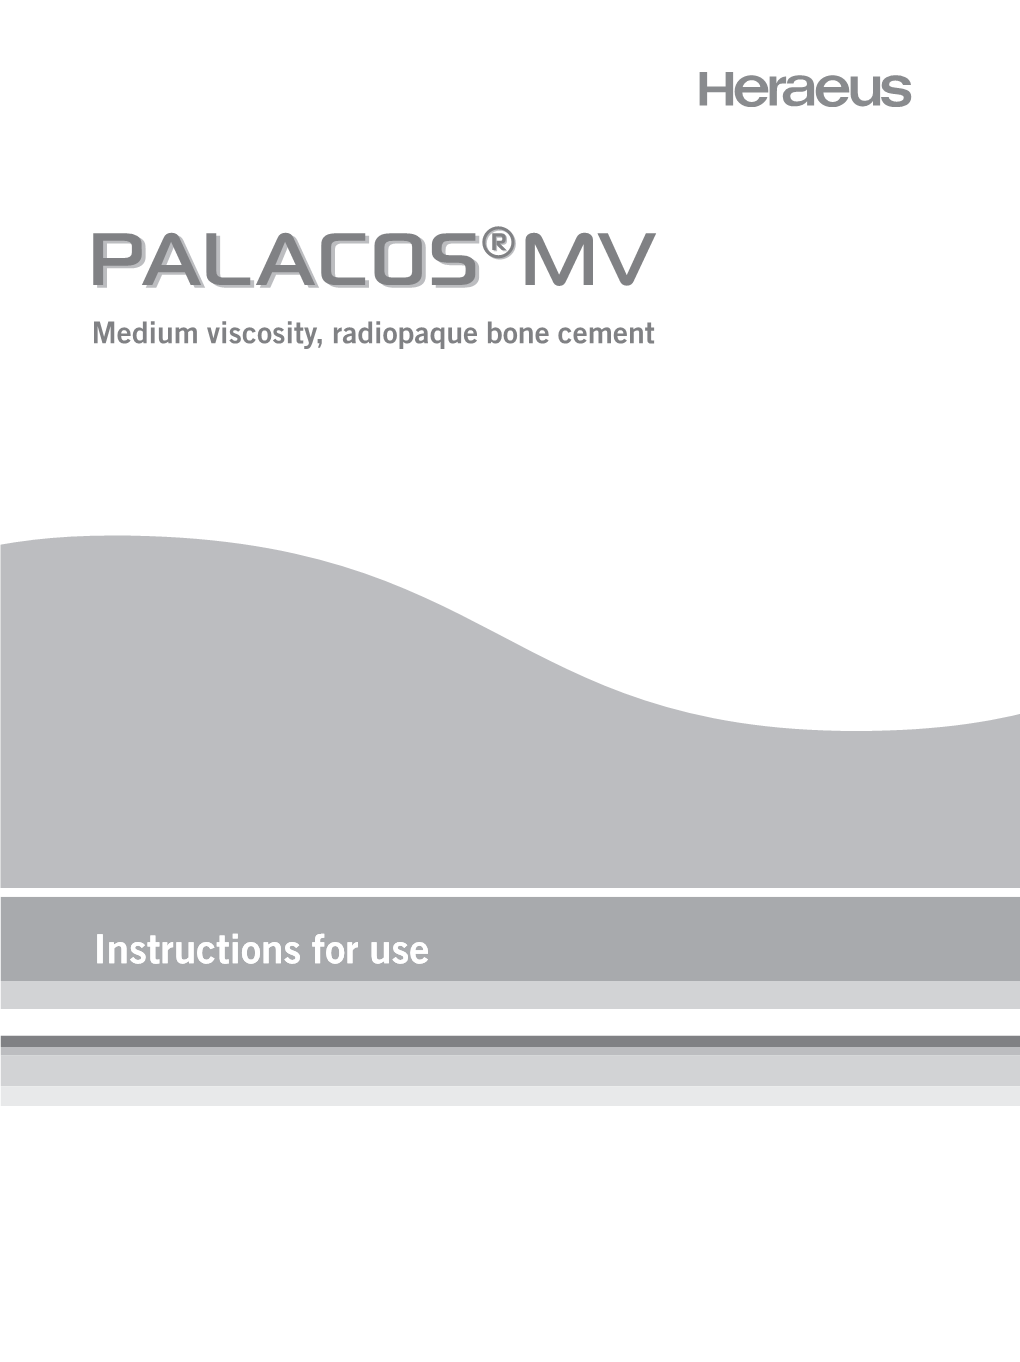 Instructions for Use: PALACOS MV